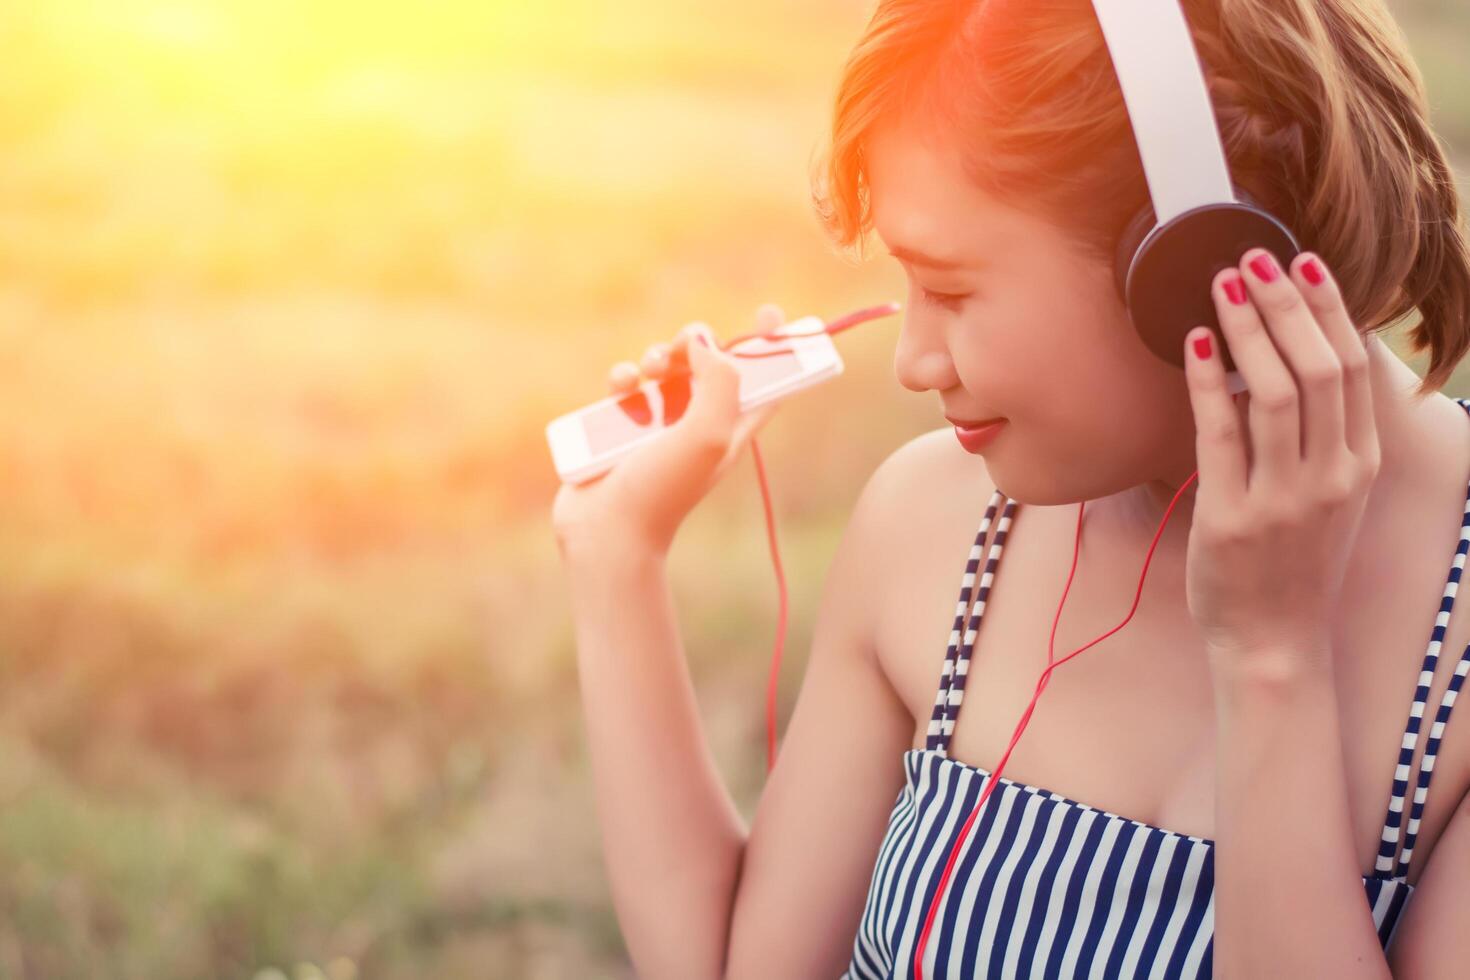 kvinna livsstilskoncept. ung asiatisk kvinna som lyssnar på musik. foto